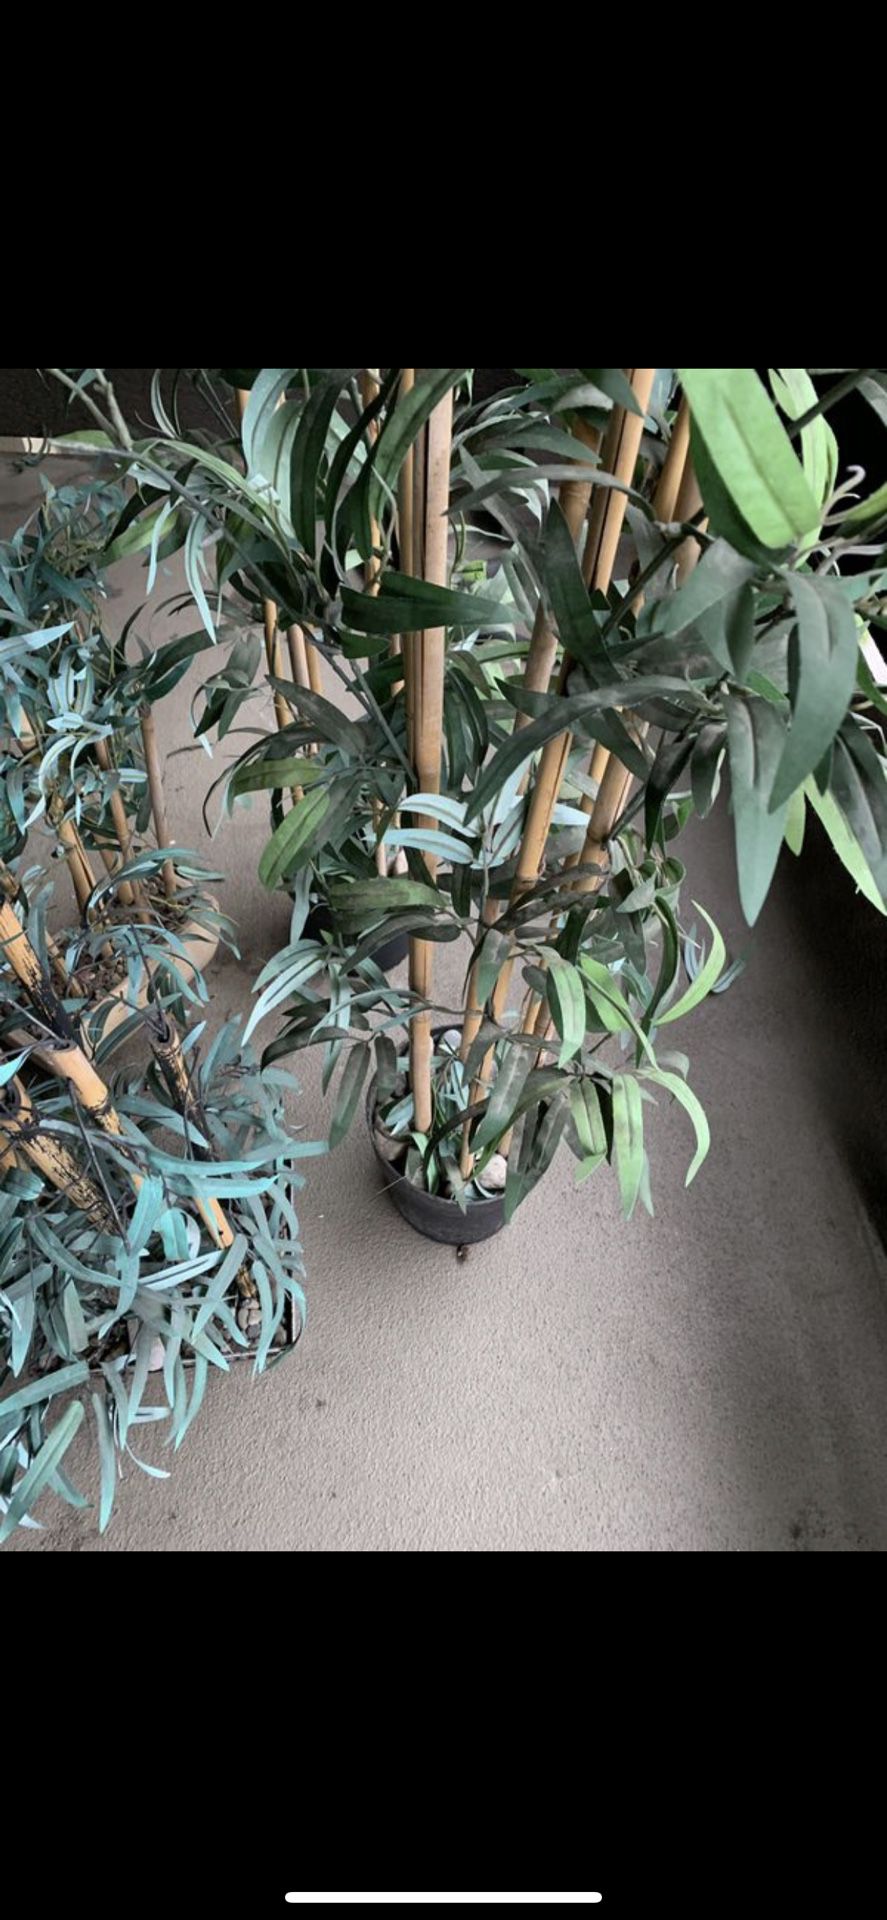 4 ikea plants &2 small plants